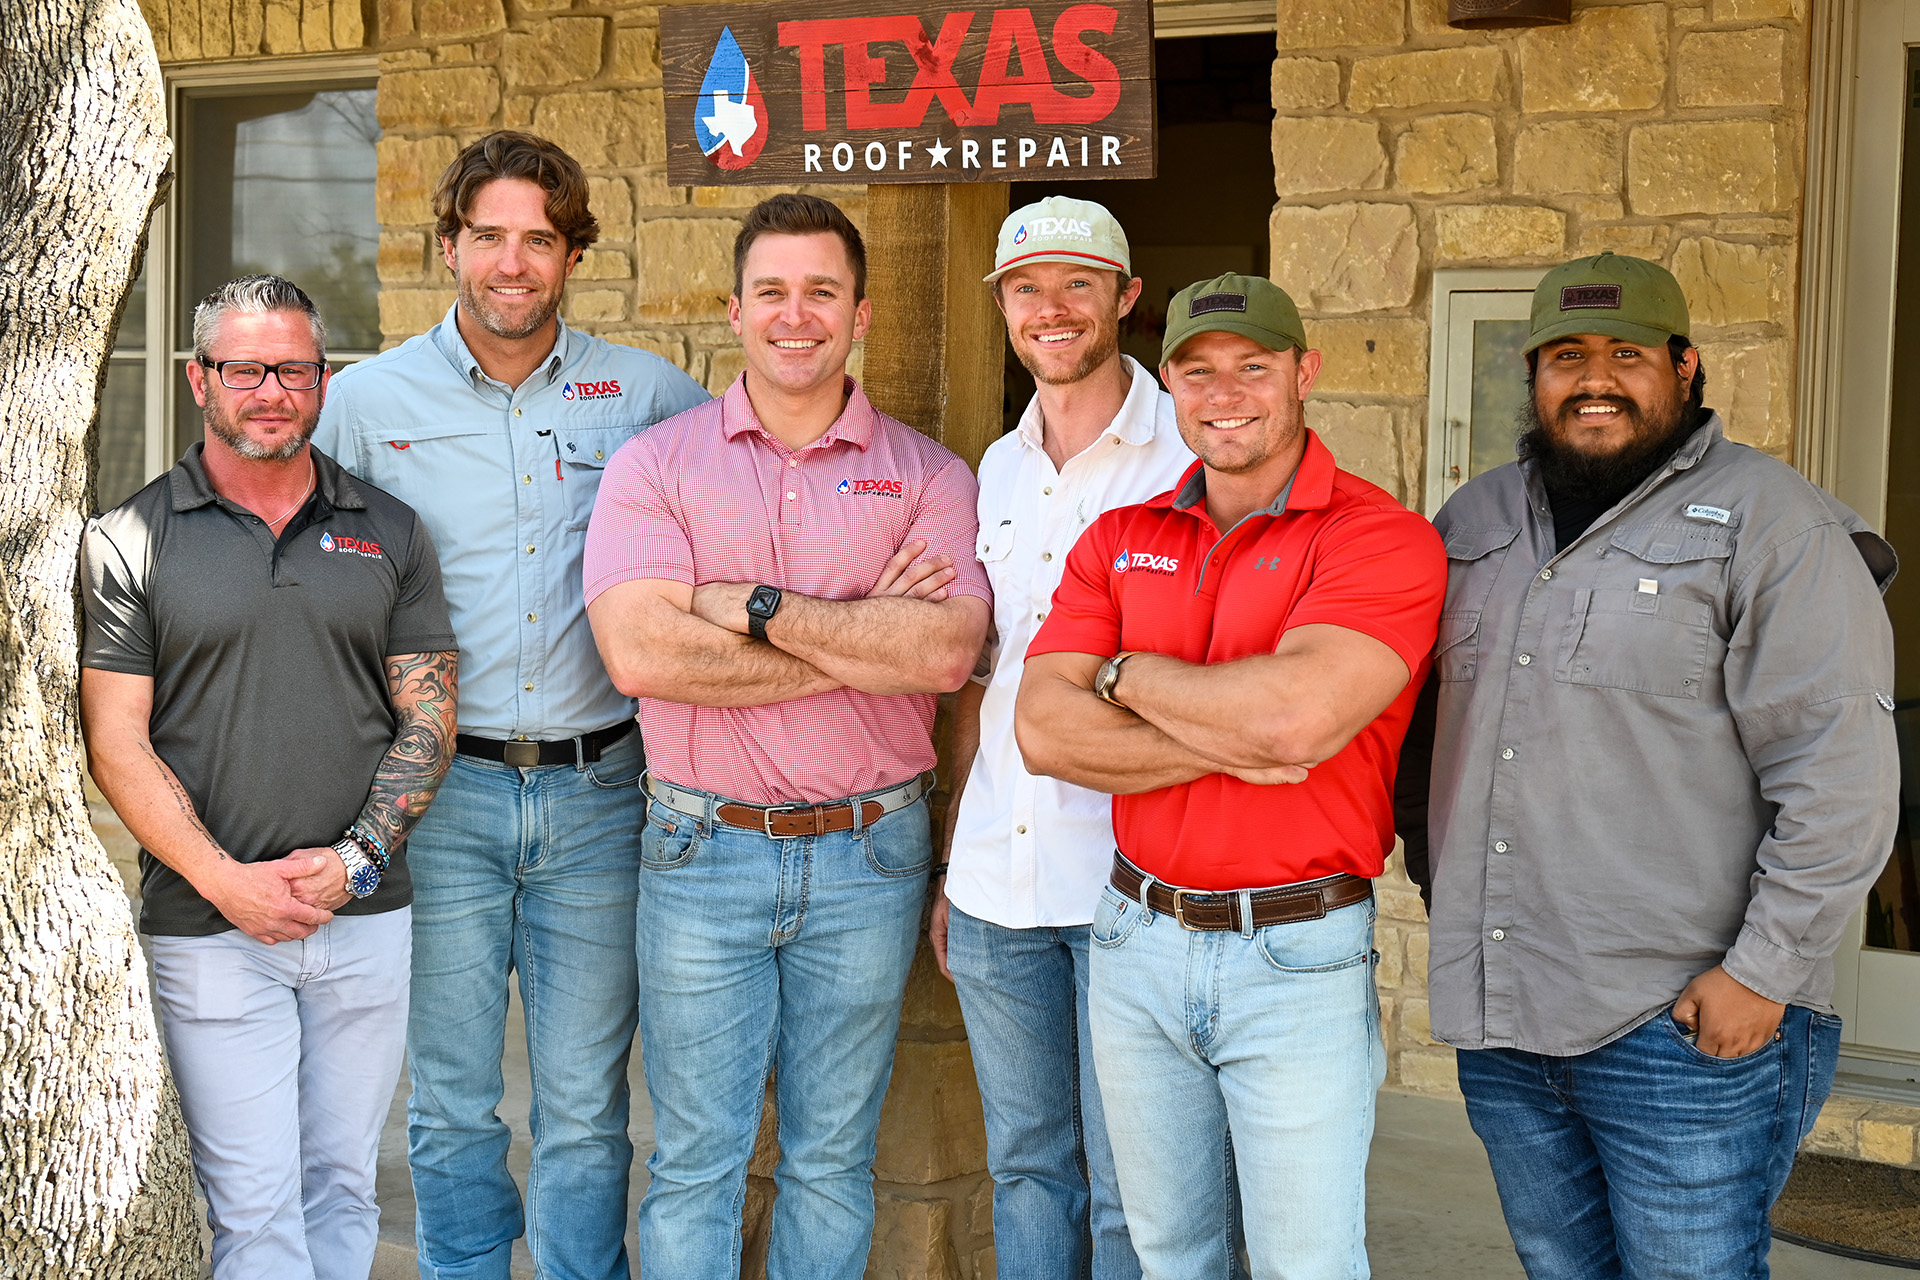 Texas Roof Repairtx roof repair team23